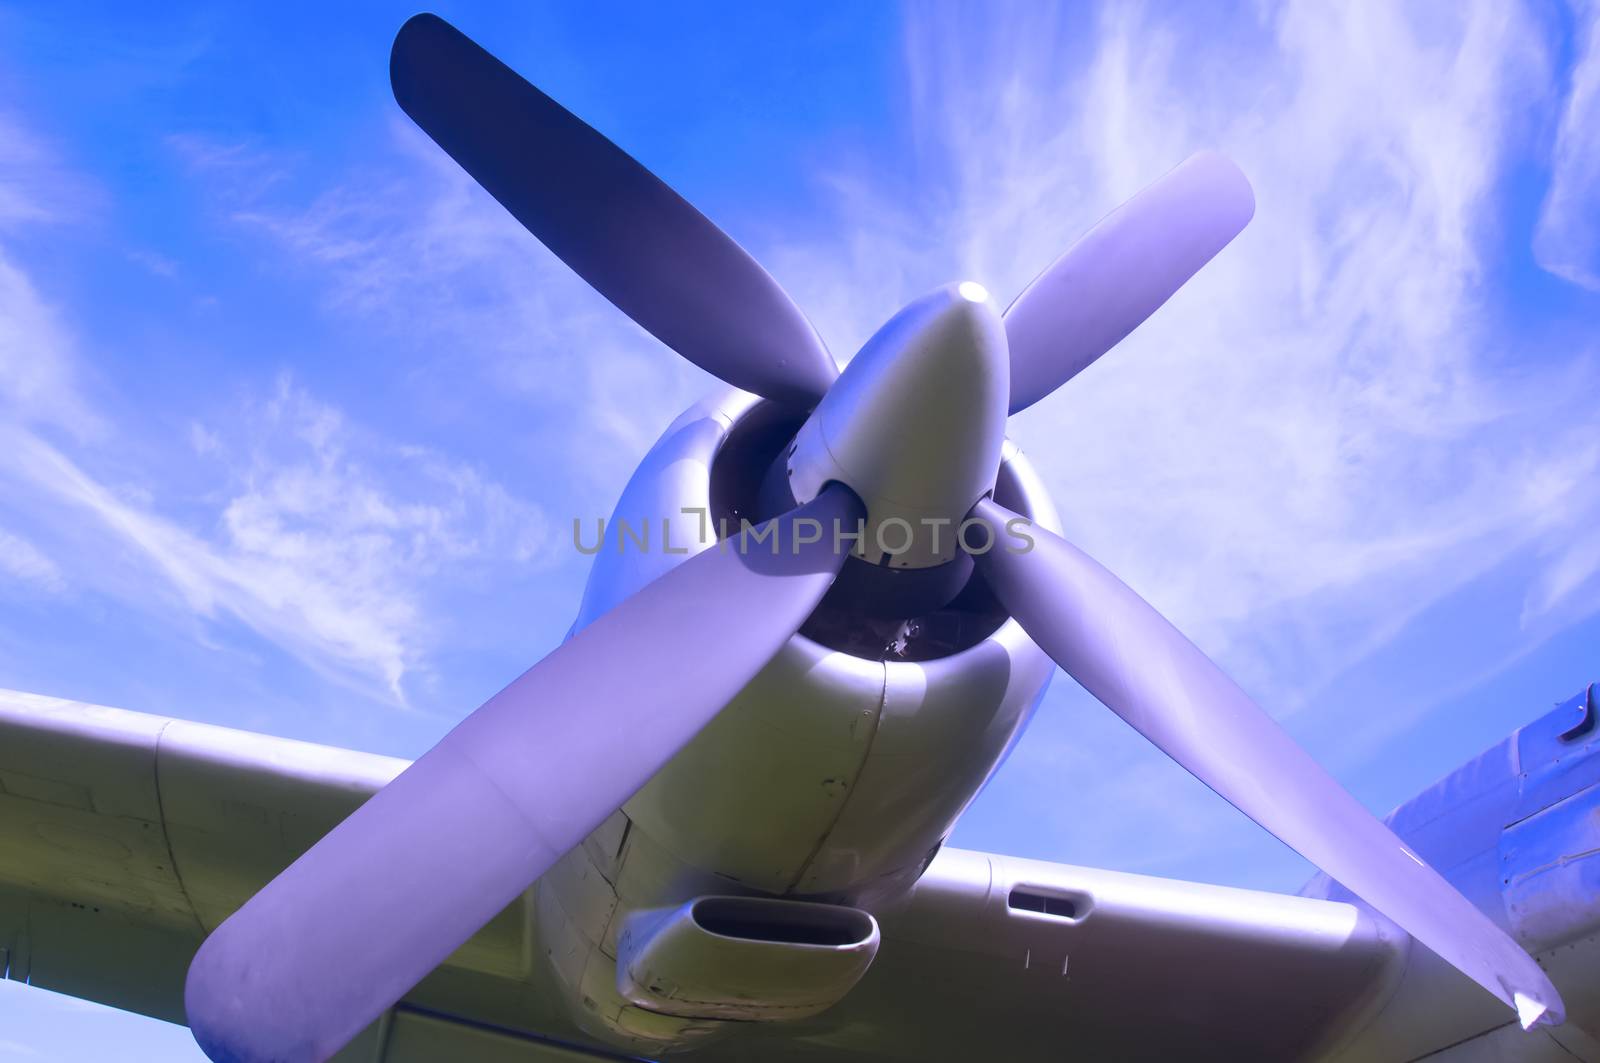 Aircraft propeller, blue sky background by Bezdnatm